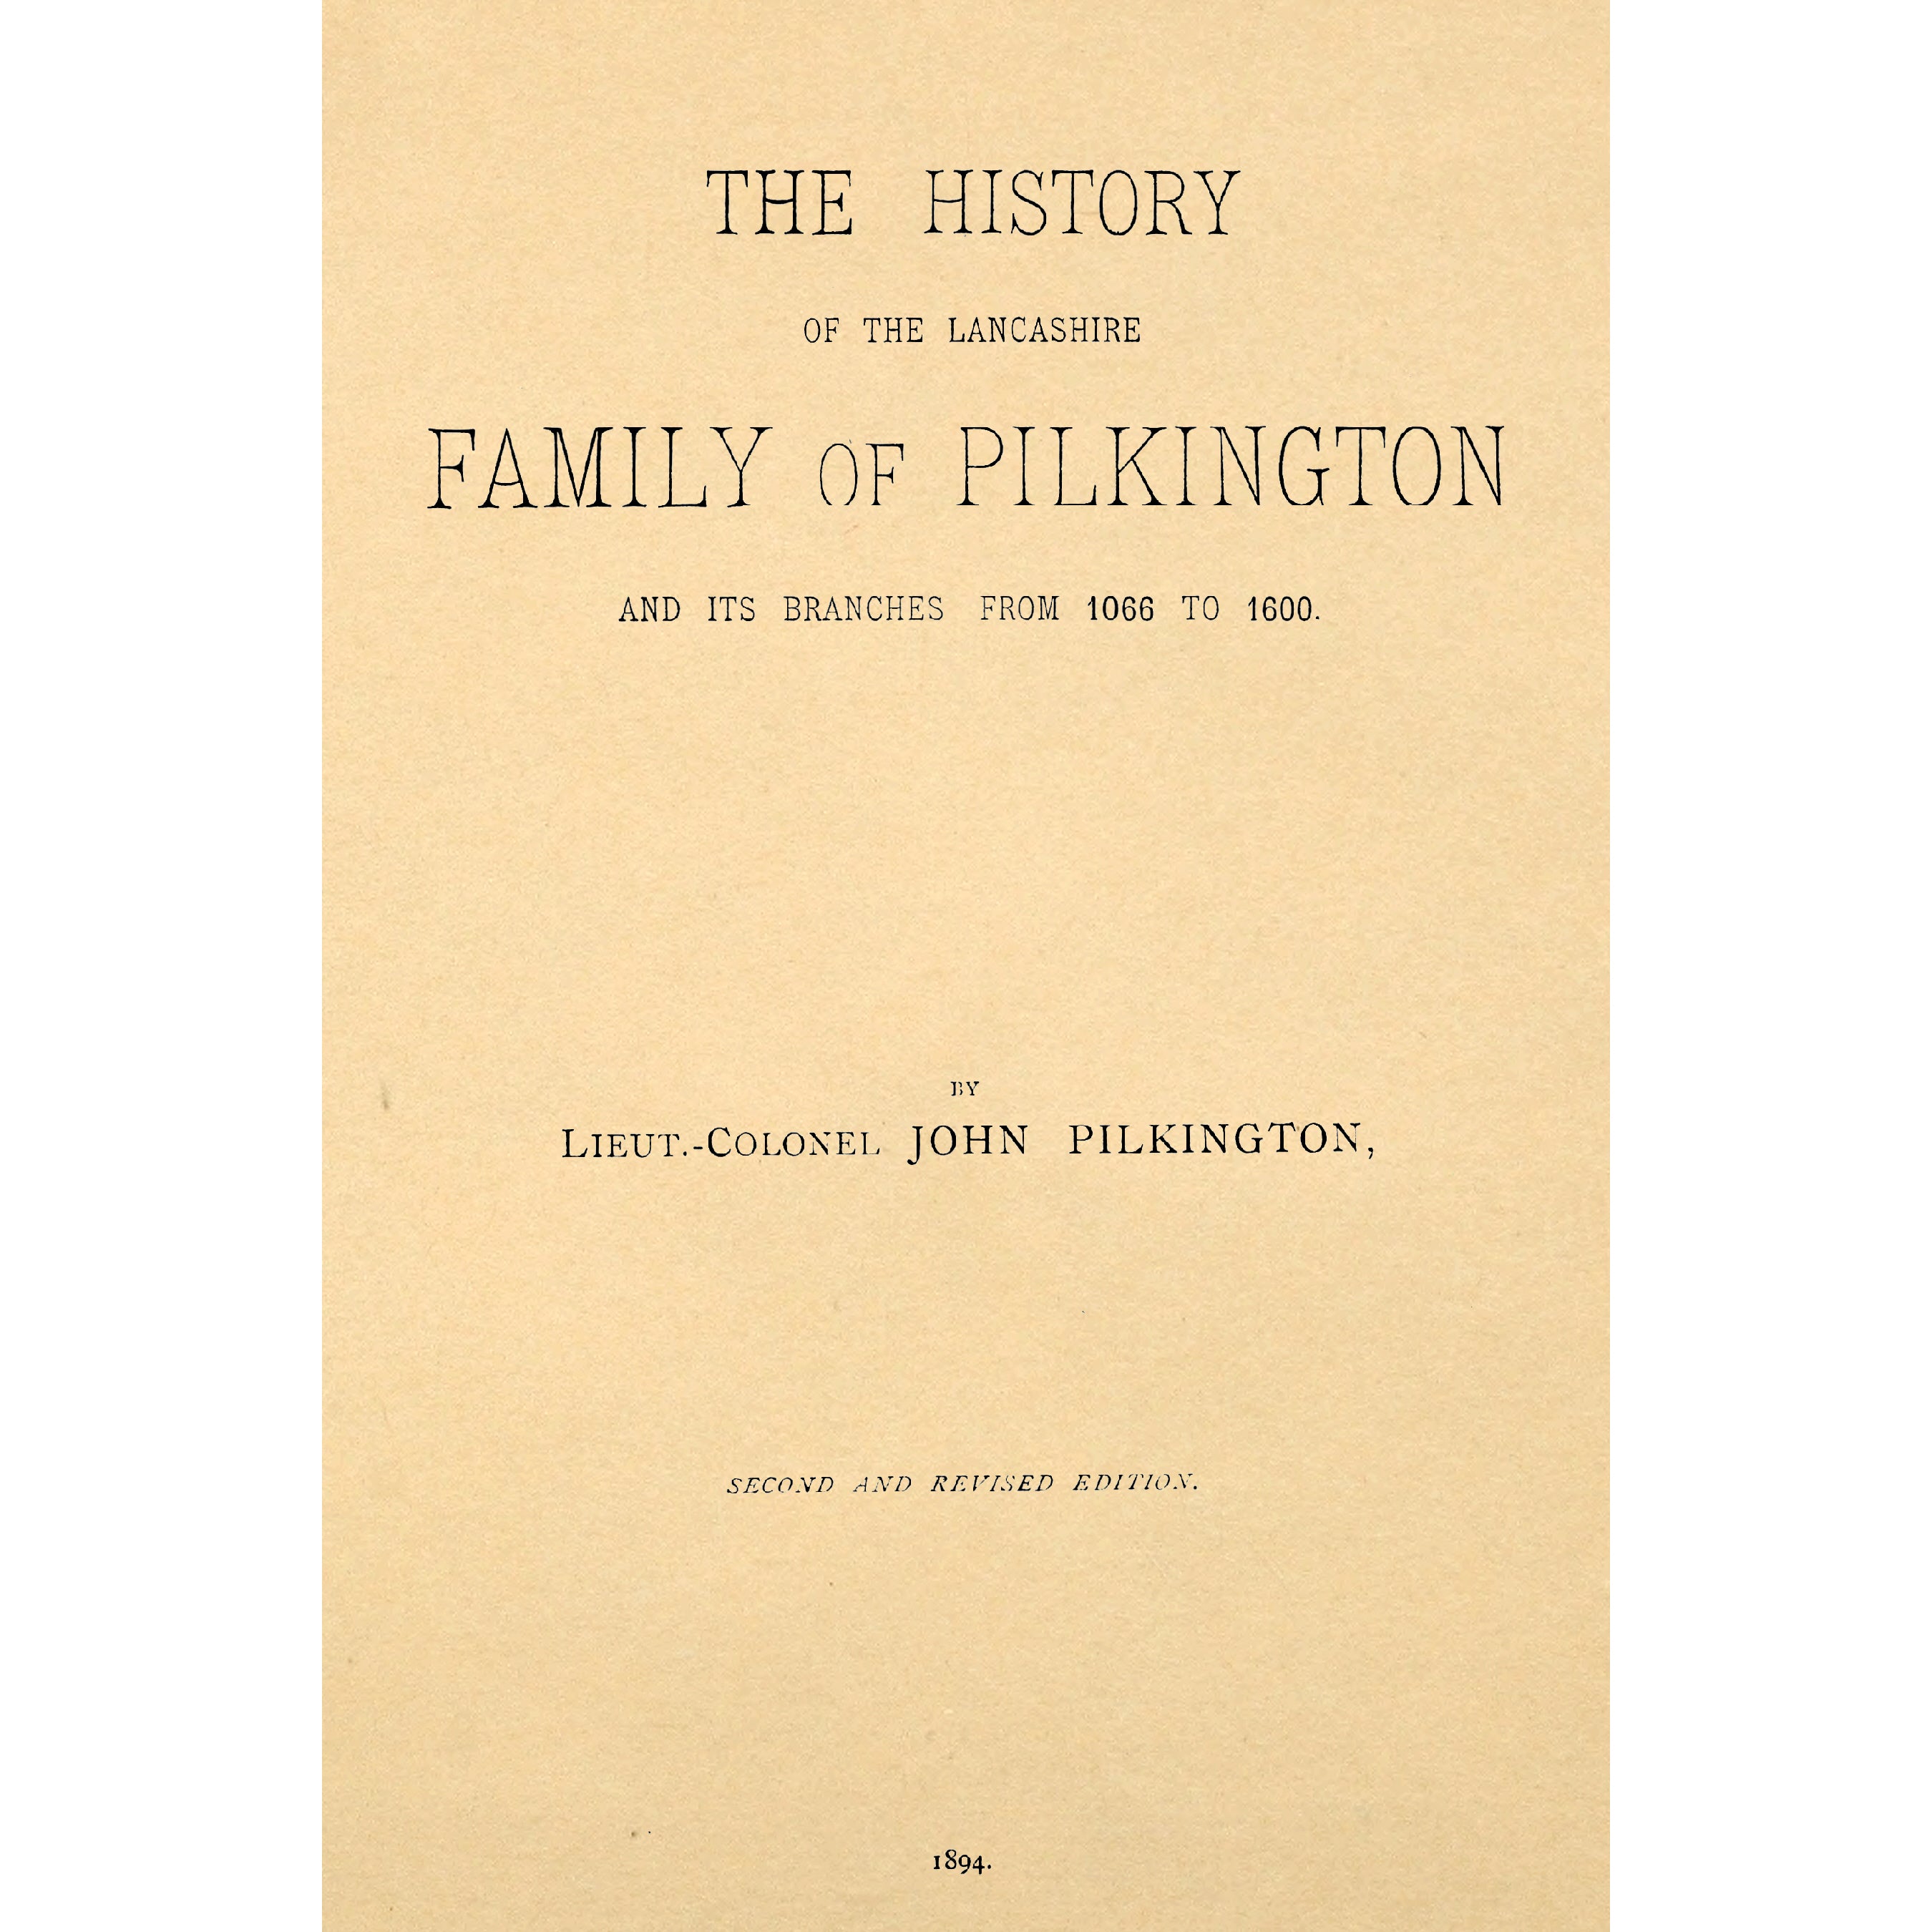 The History of the Lancashire Family of Pilkington